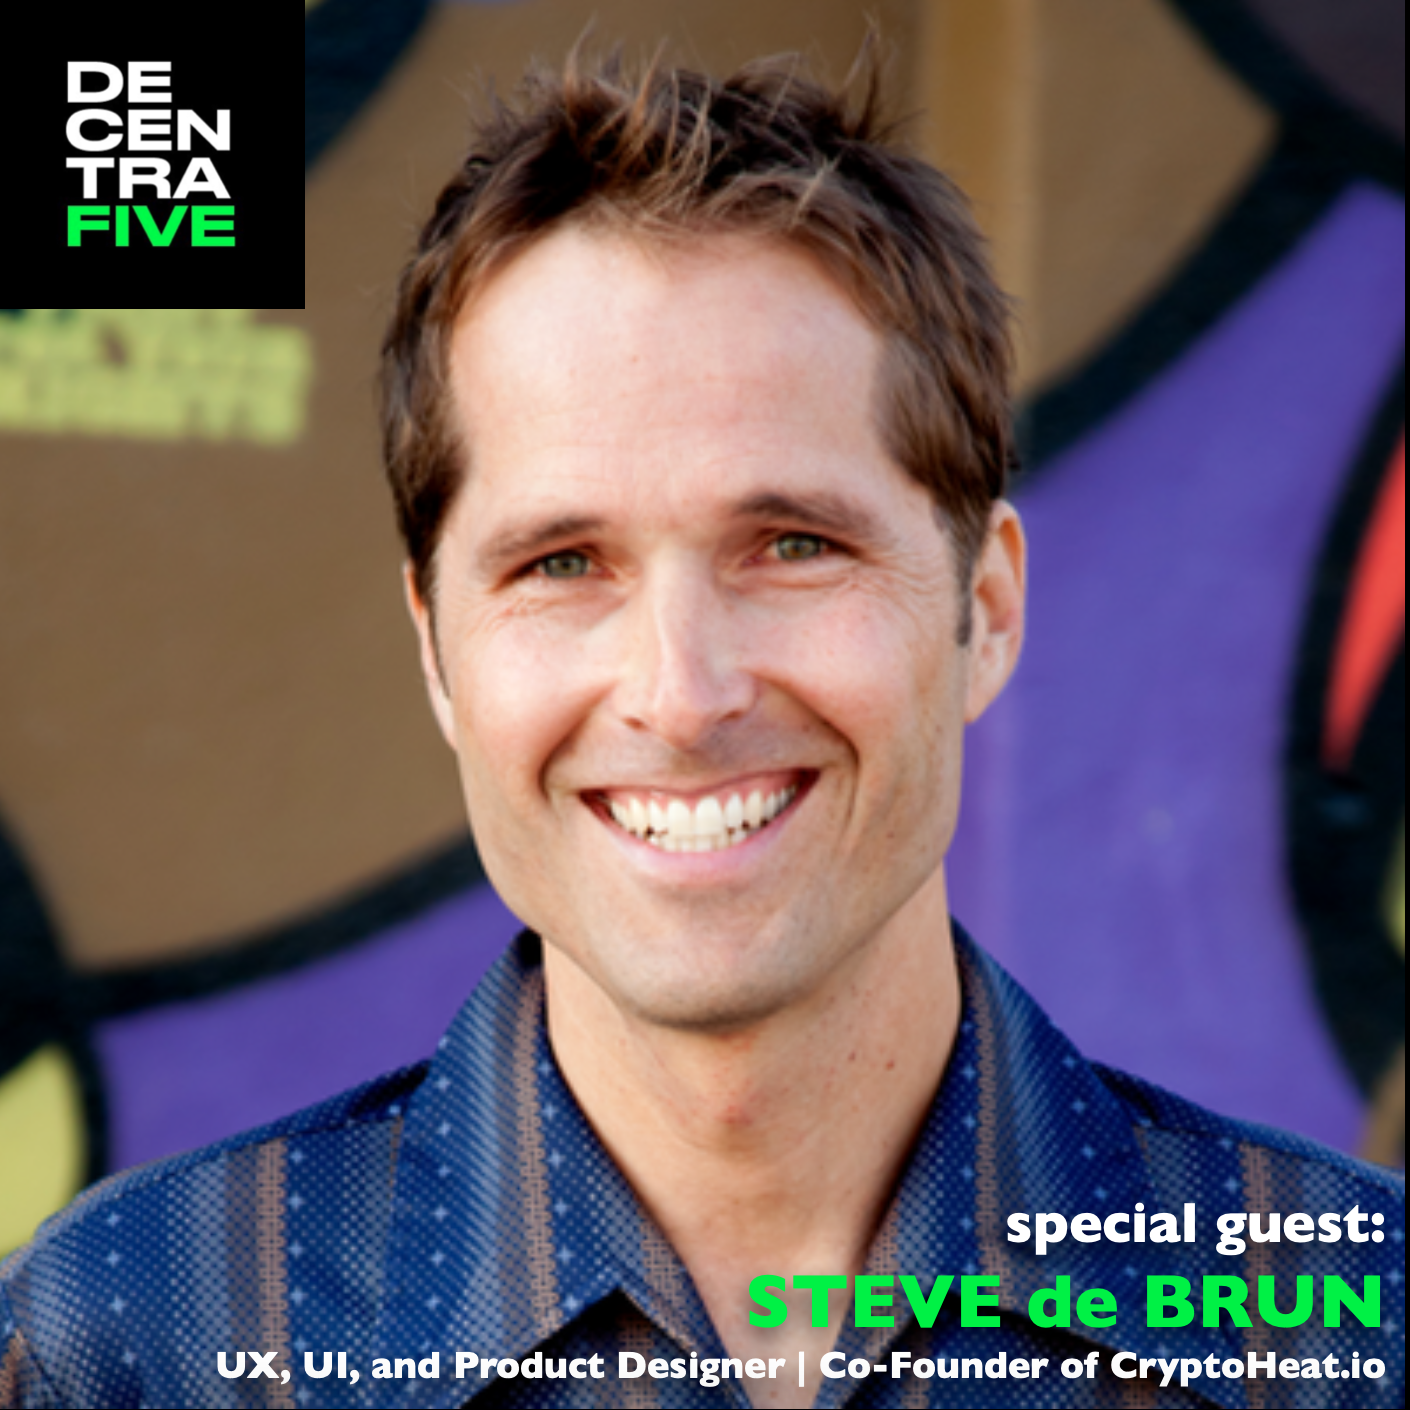 Steve de Brun | UX, UI, Product Strategist, Designer, Builder, Co-Founder of CryptoHeat.io | on DECENTRAFIVE Image